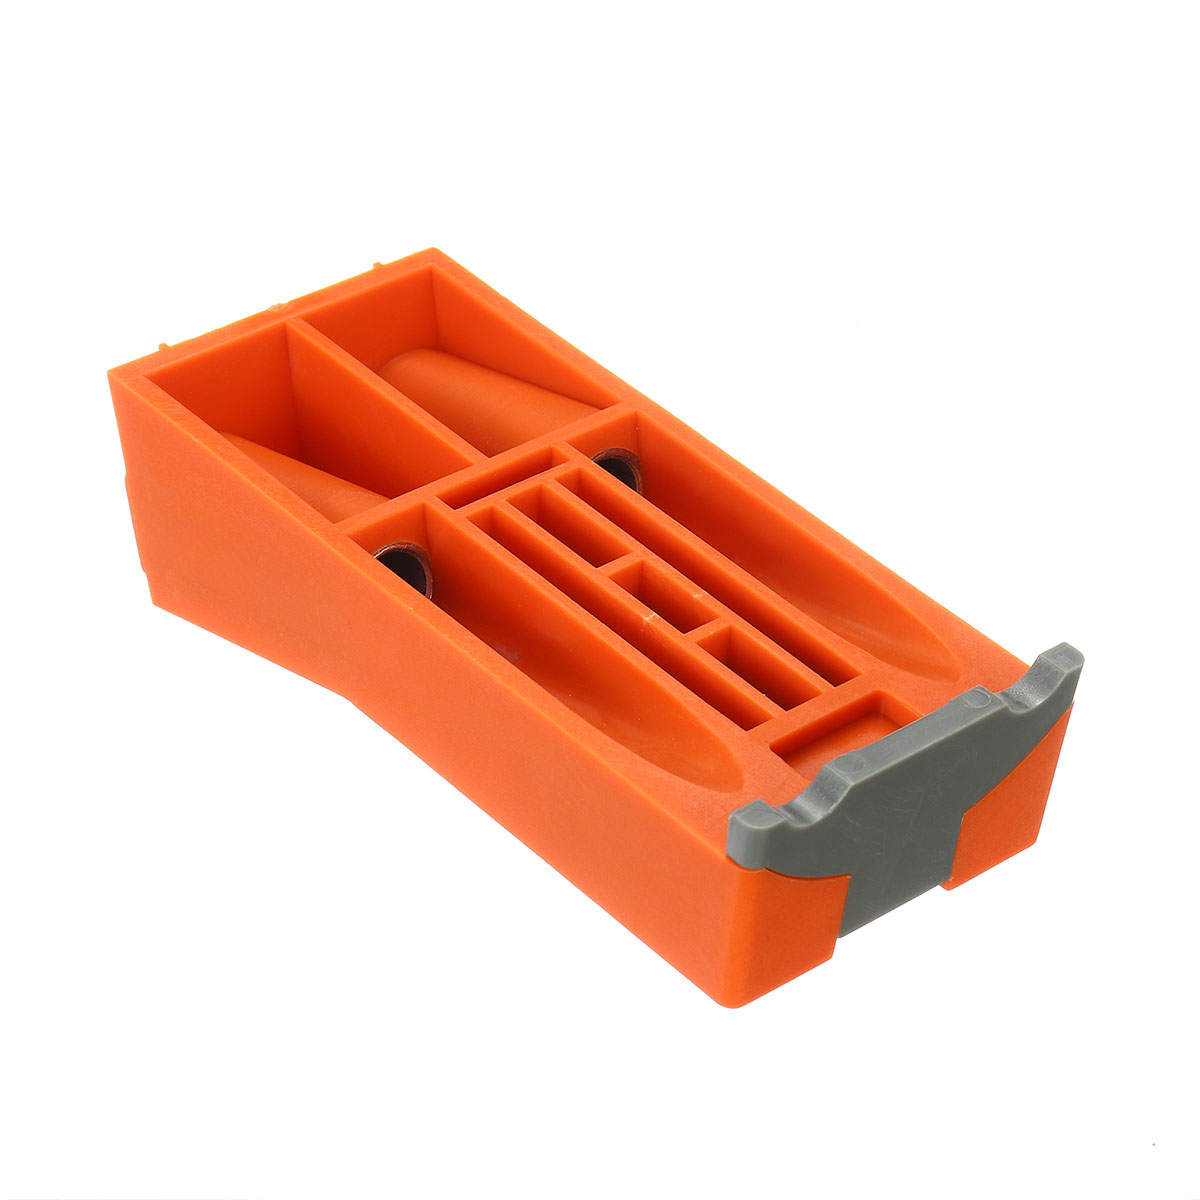 Pocket-Hole-Jig-Mini-Kit-Machine-System-With-Step-Drill-Bit-Depth-Collar-1650891-6